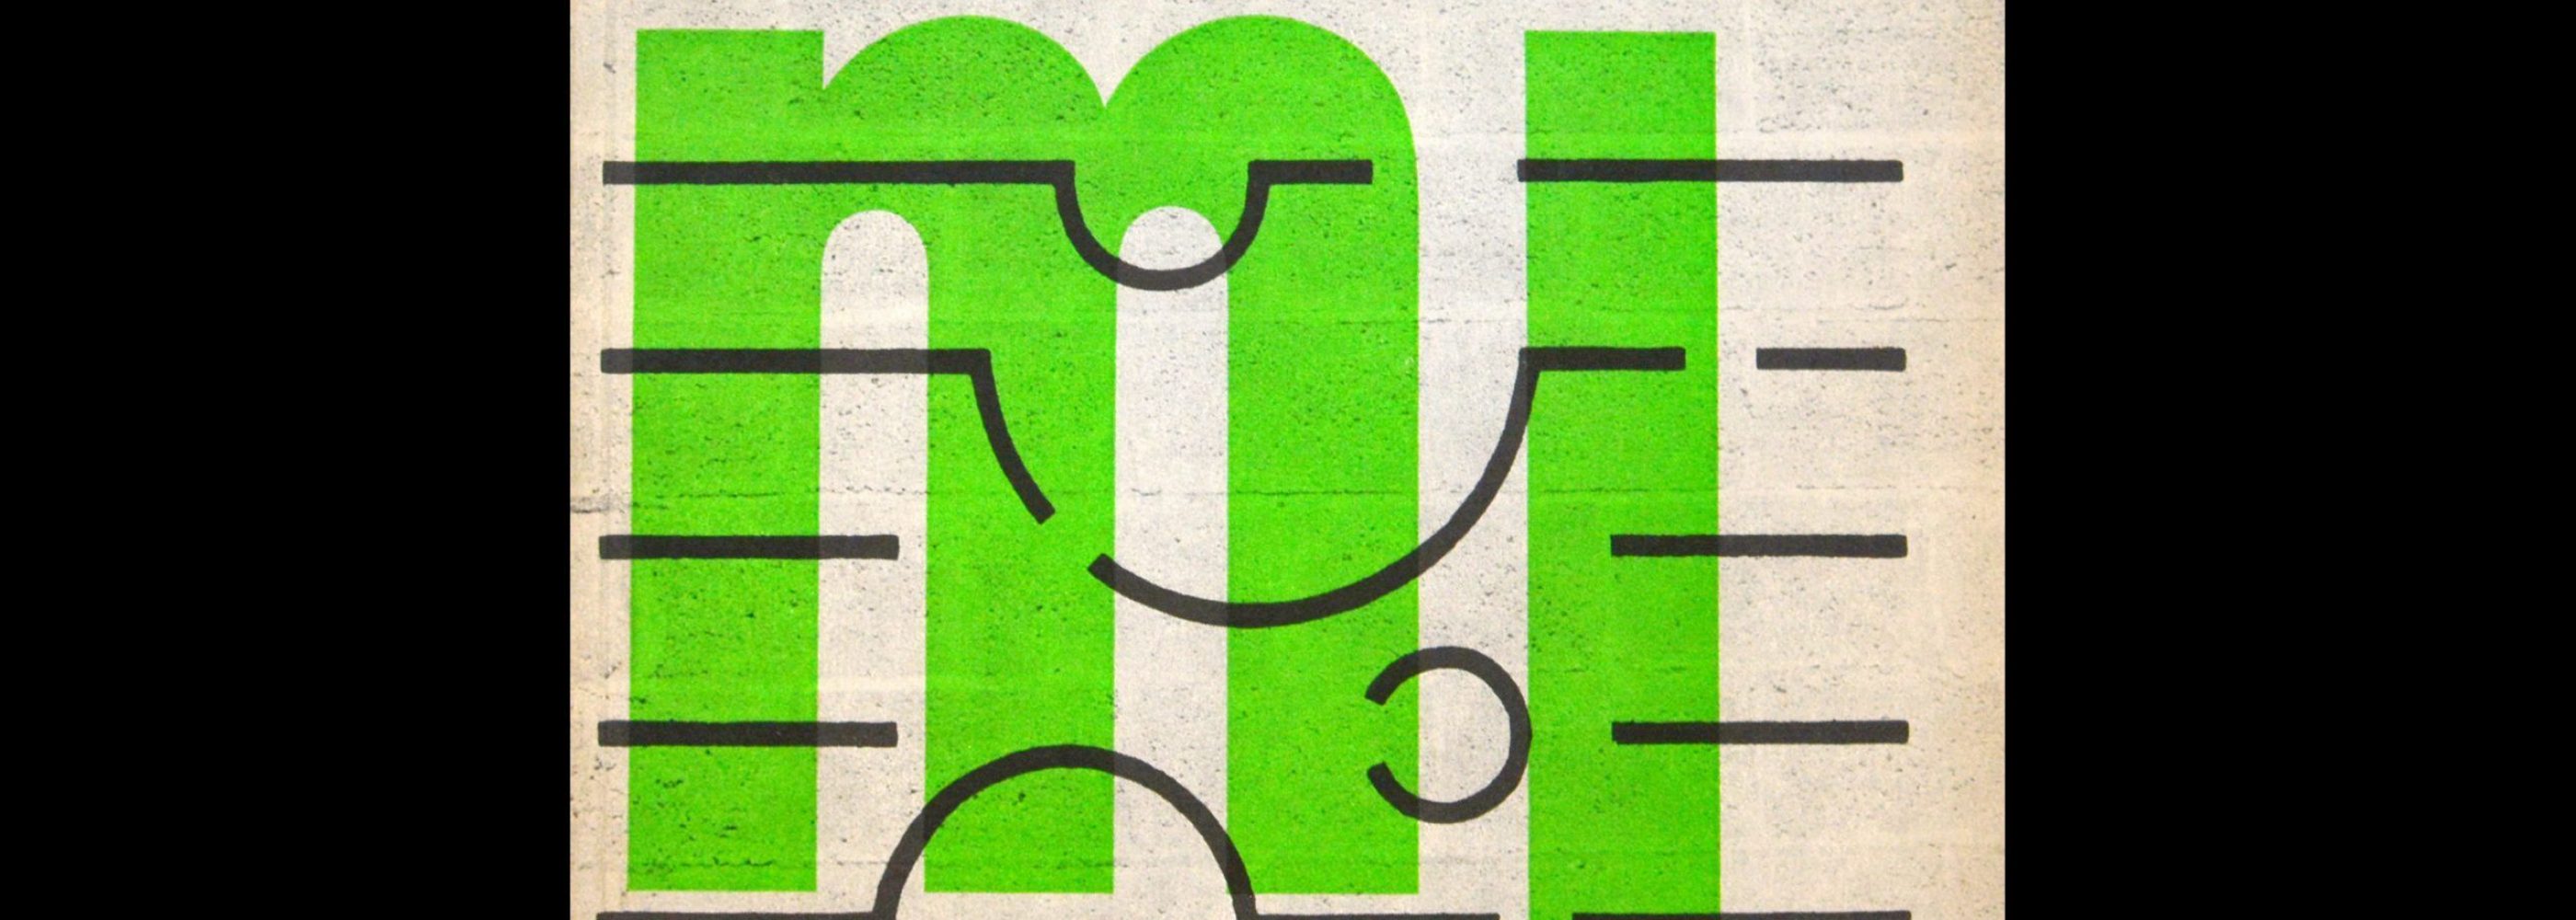 Museumjournaal, Serie 11 no 5, 1966. Designed by Jurriaan Schrofer